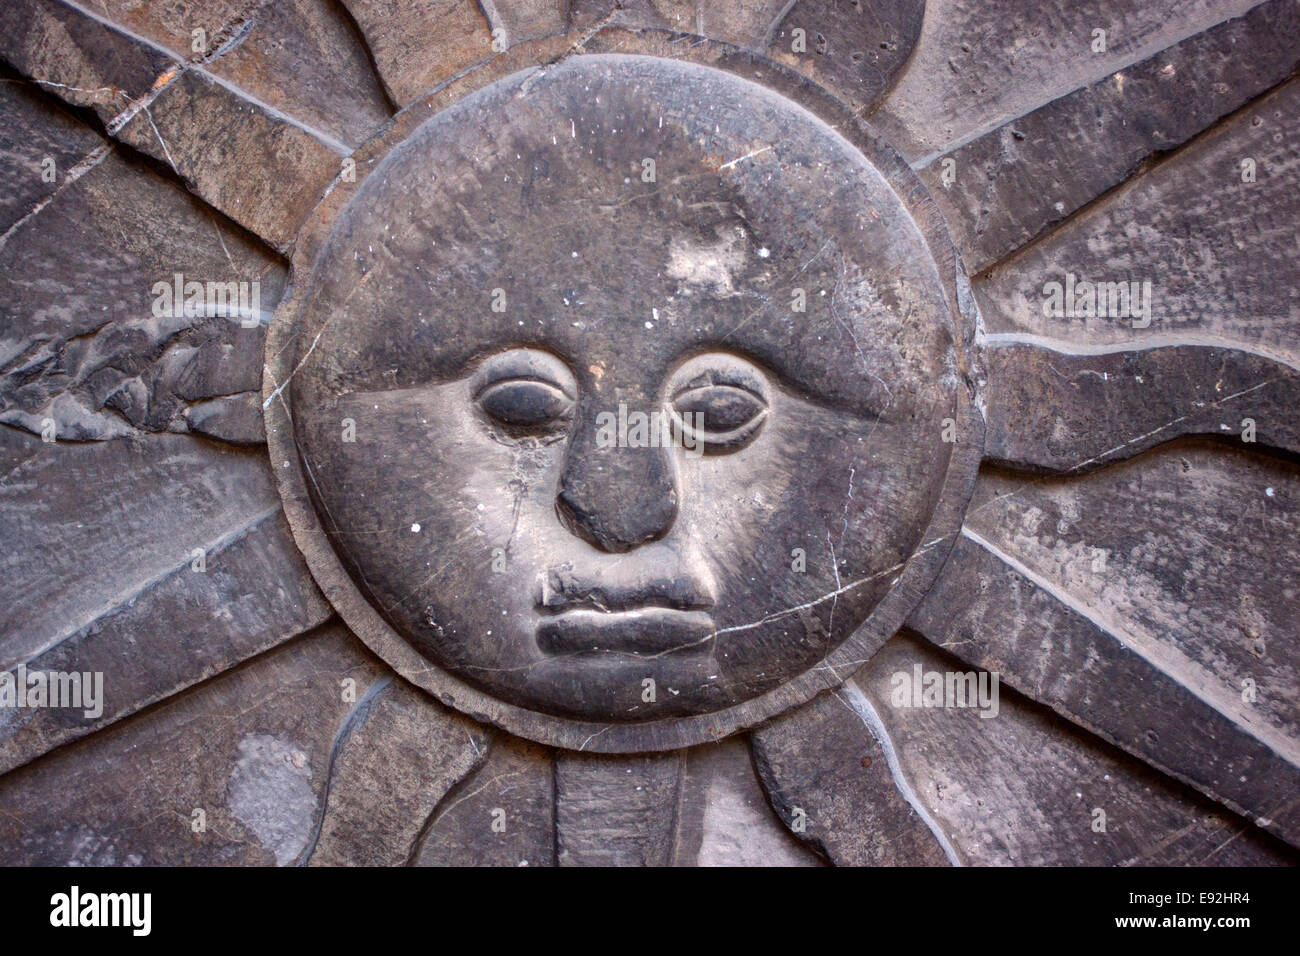 A solar sculpture is displayed in the Museo de Zaragoza, Aragon region, Spain. Stock Photo